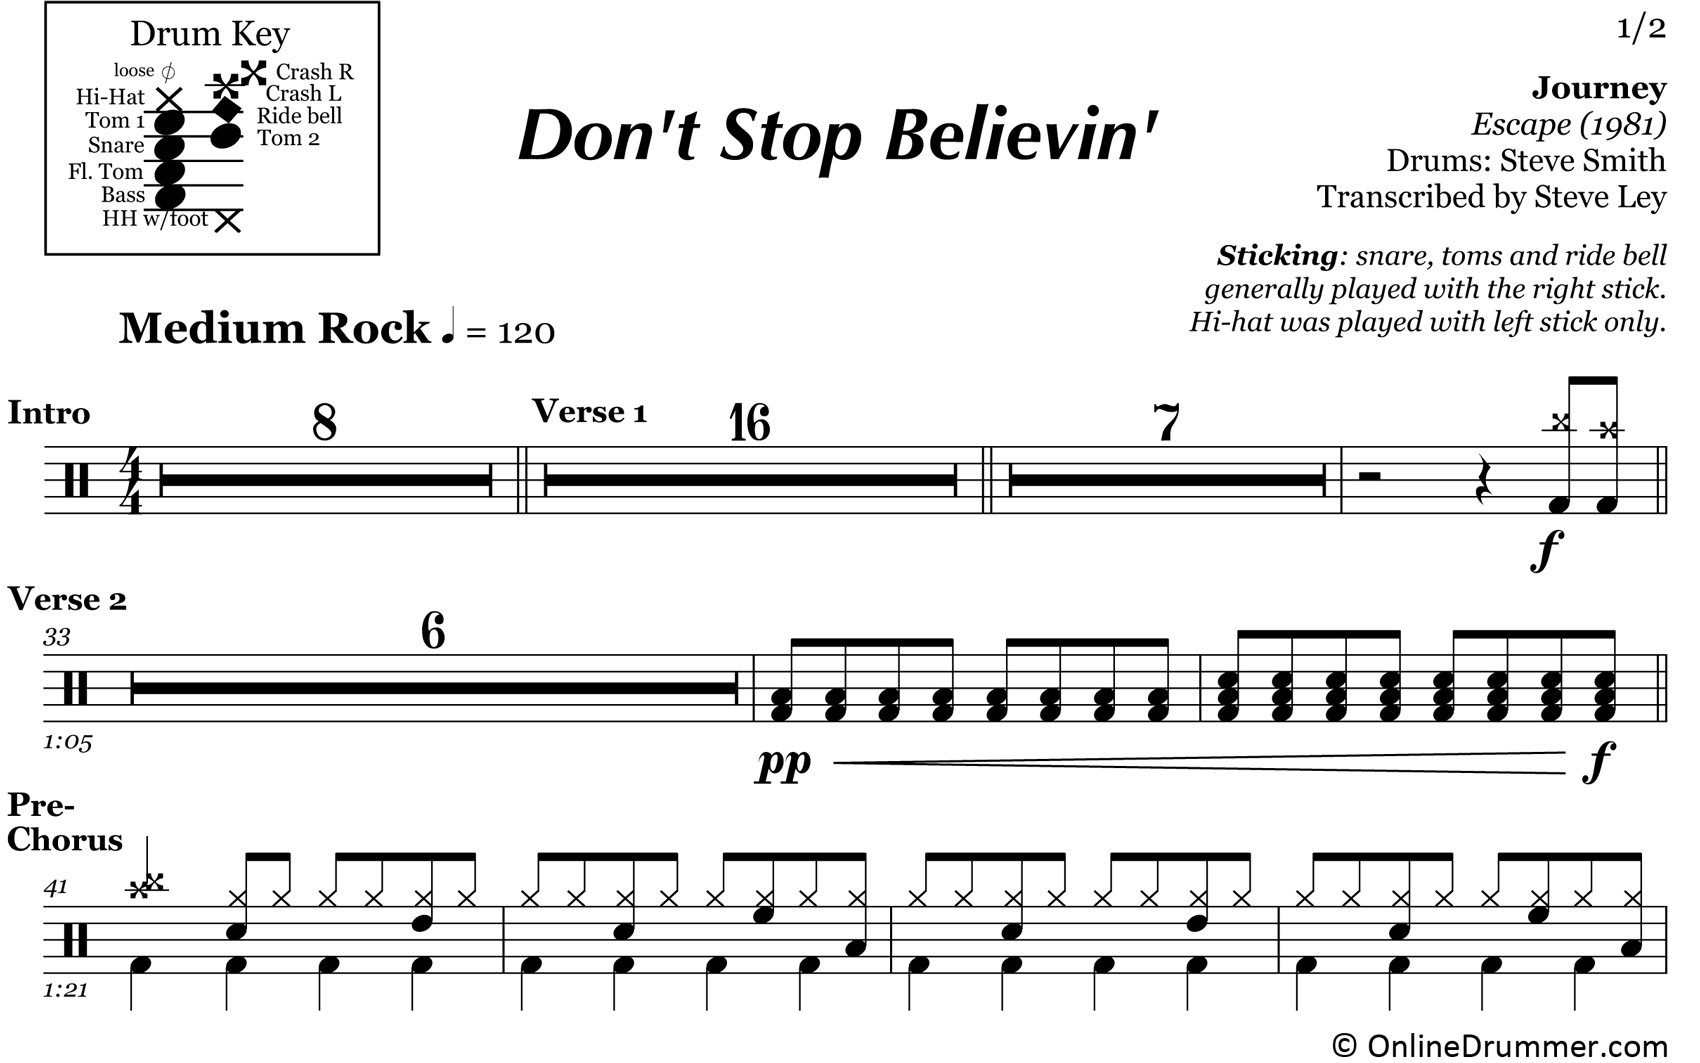 Don't Stop Believin' - Journey - Drum Sheet Music